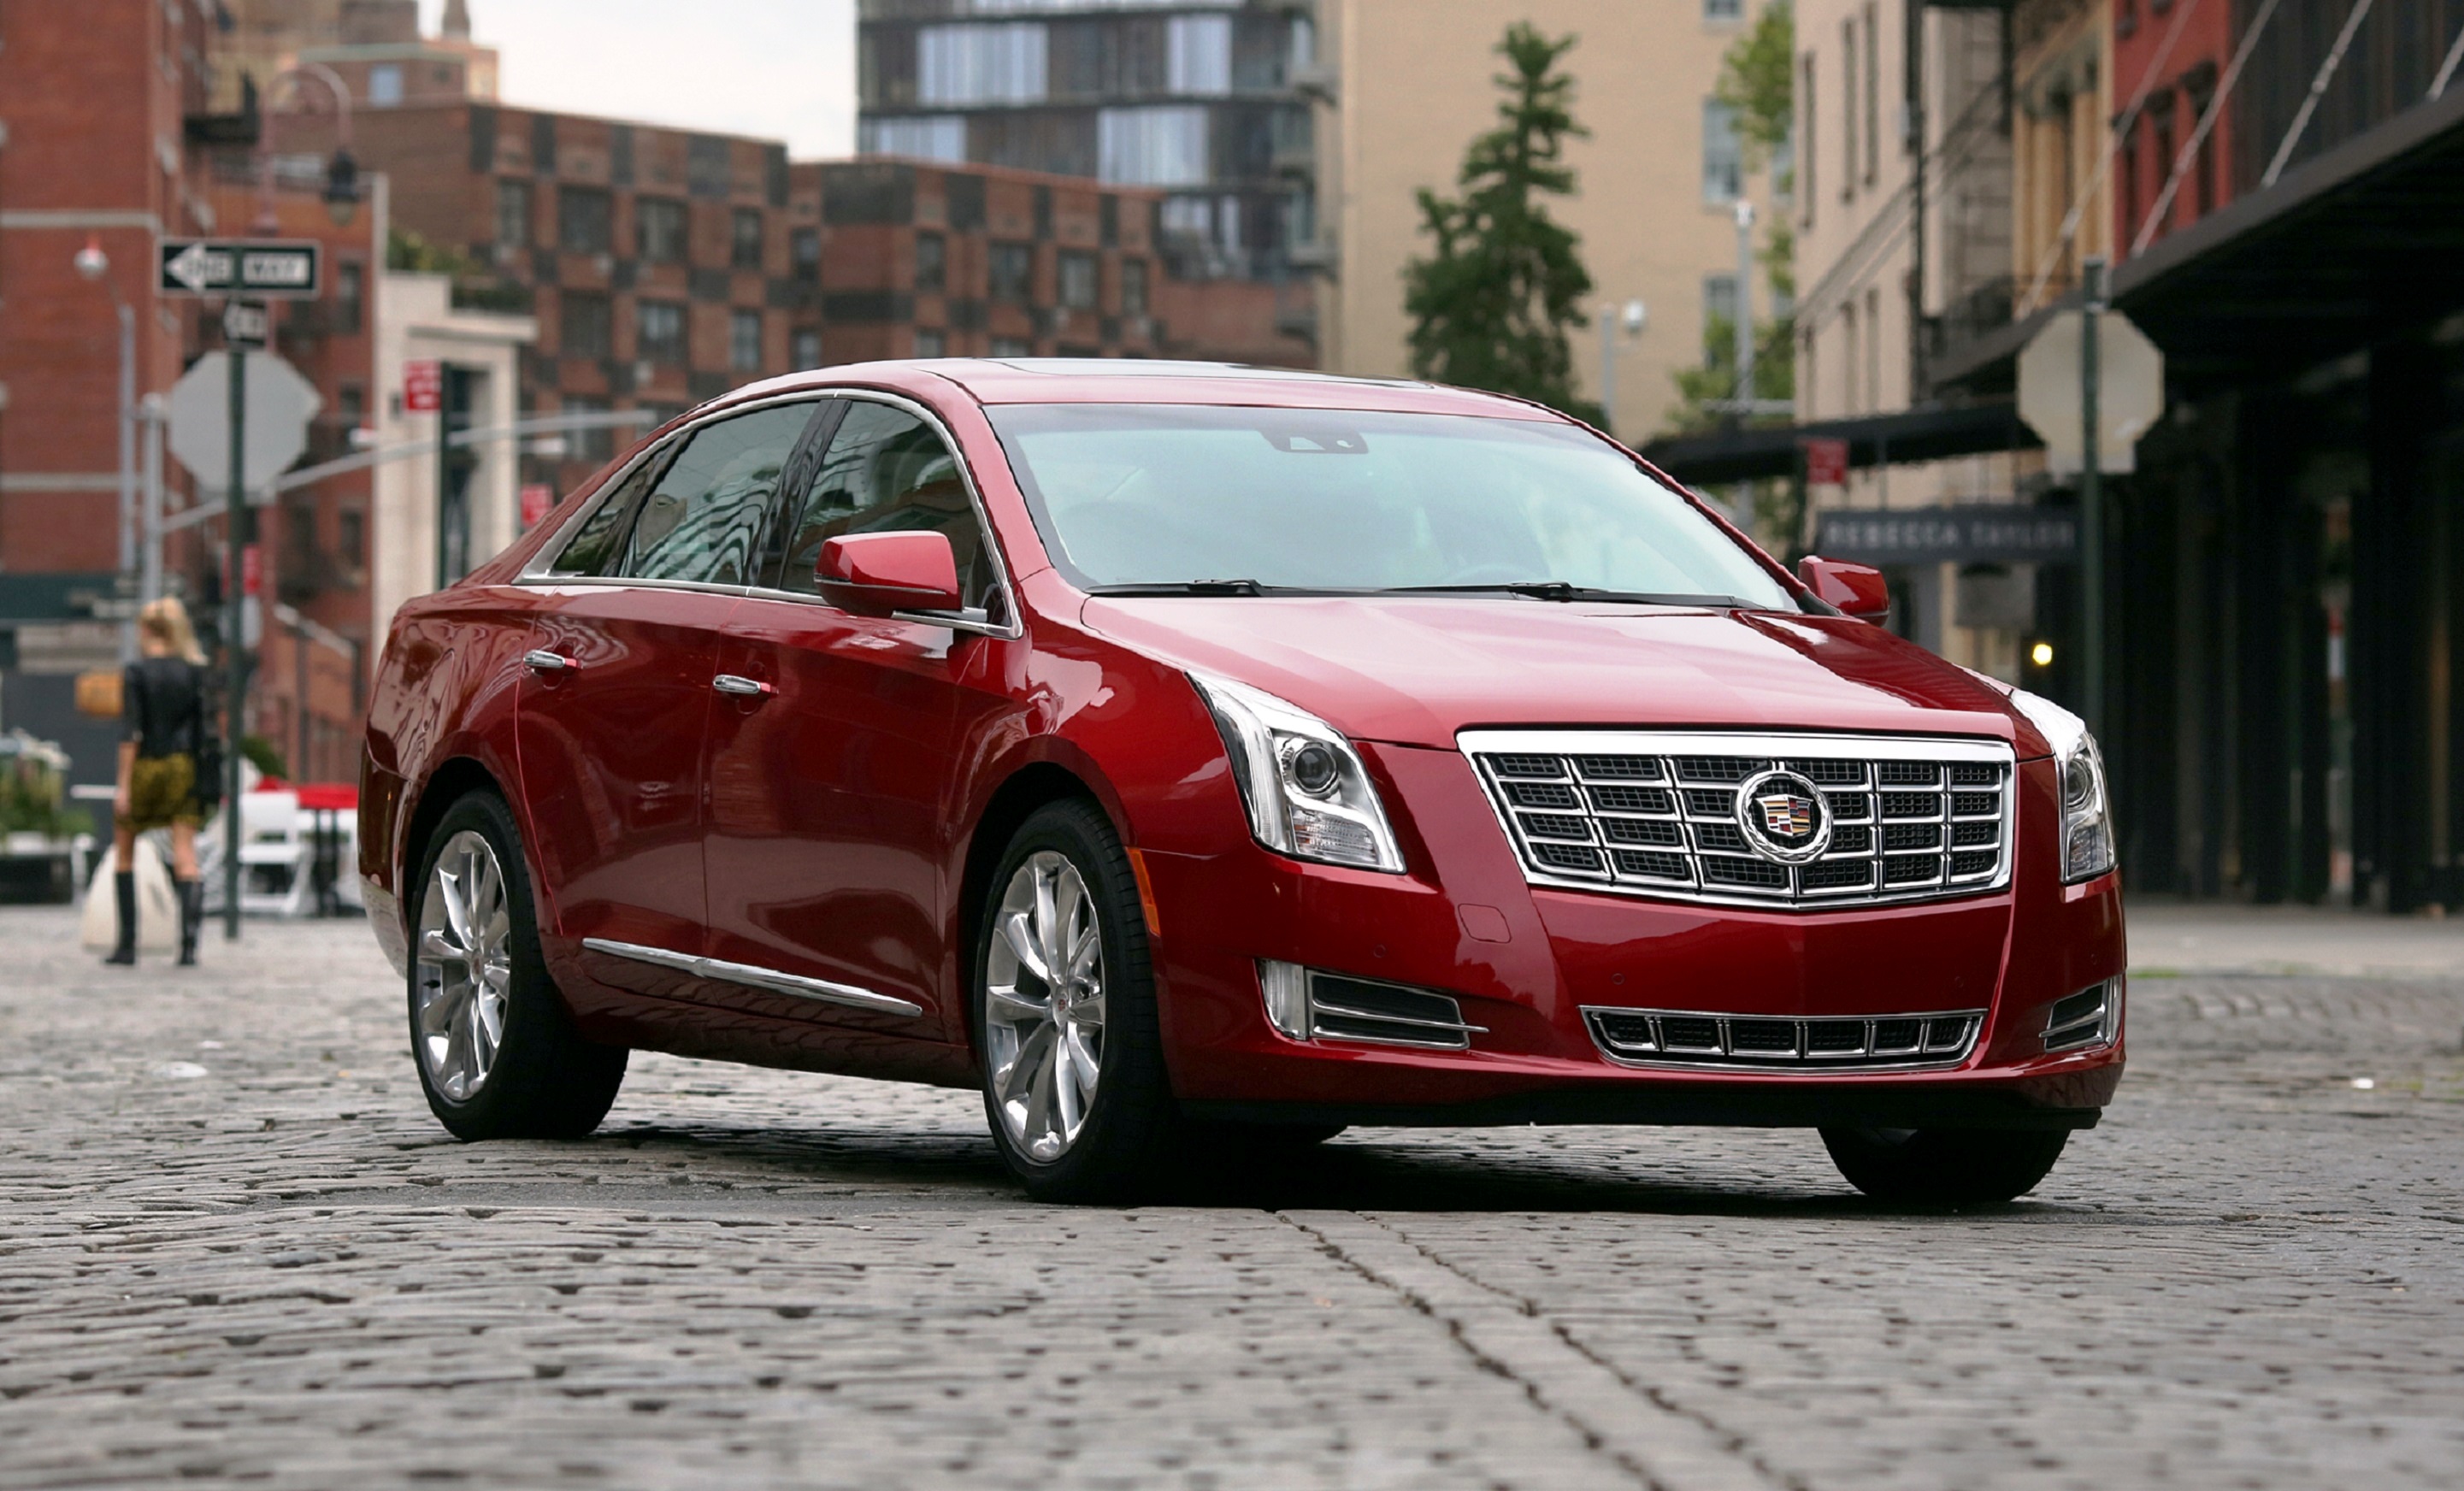 Cadillac: 115 Years of Innovation and Leadership Milestones